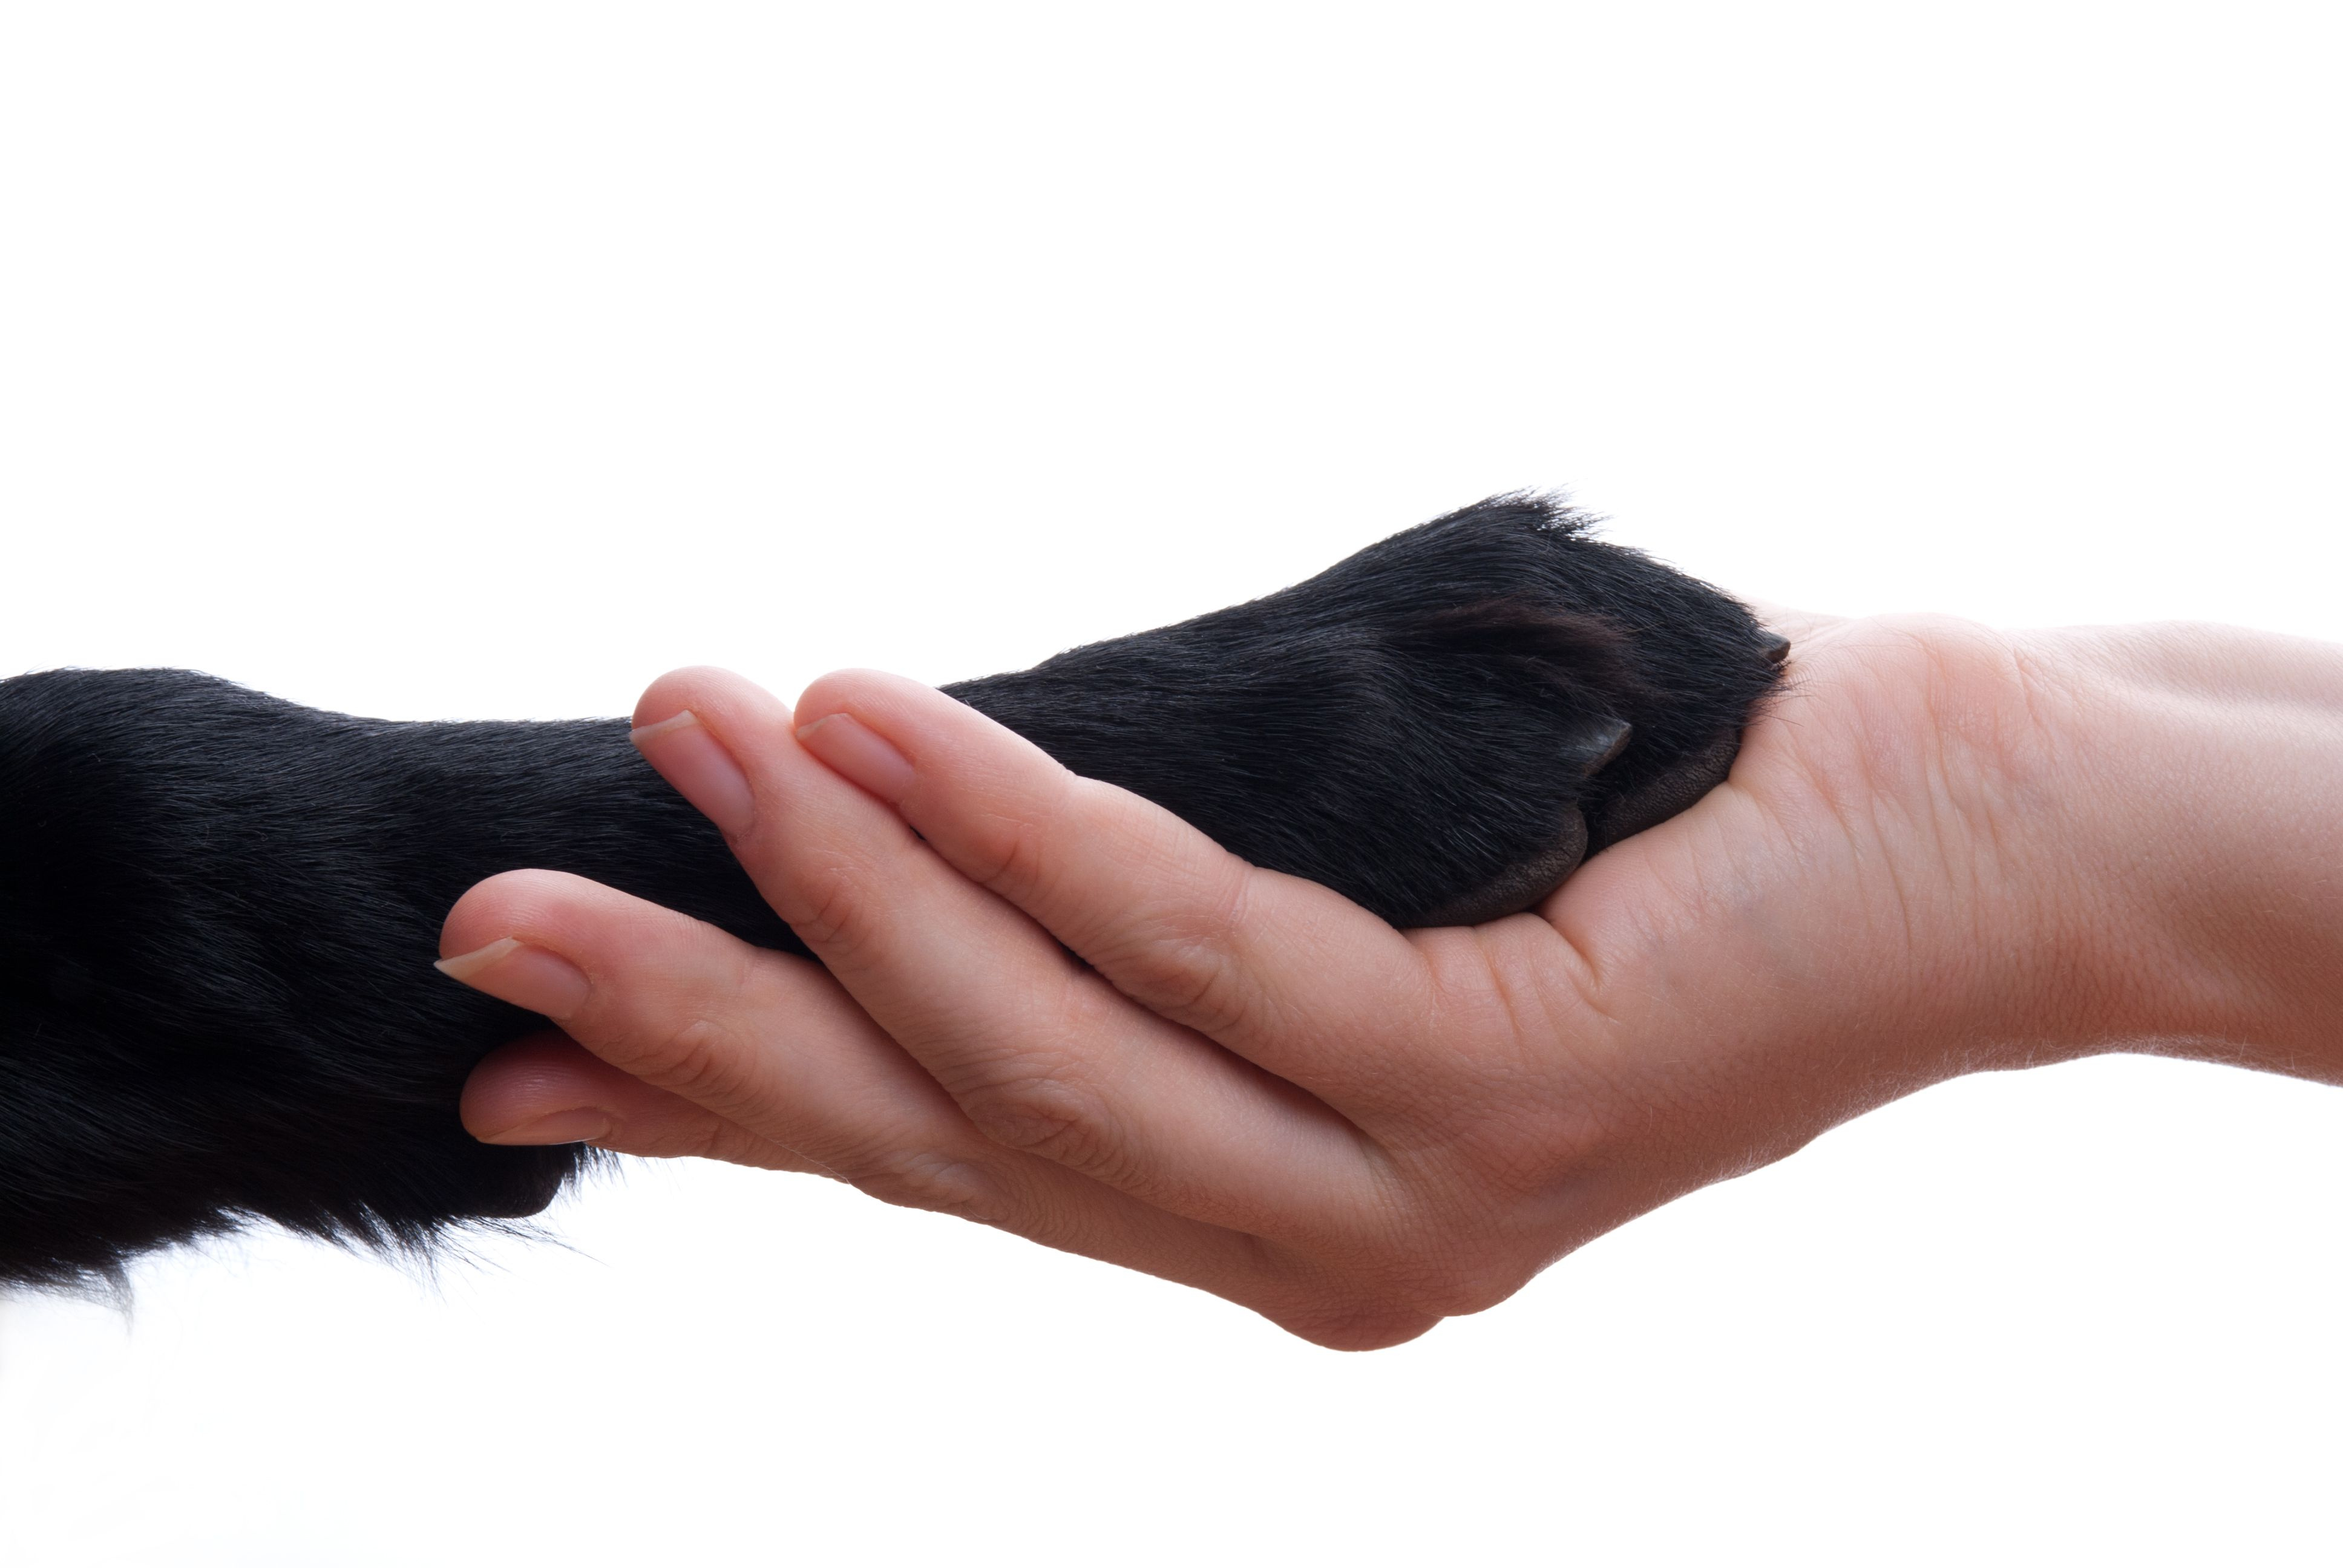 Собака на руках во сне. Лапа собаки. Рука и лапа собаки. Лапа и рука человека. Человеческая рука и лапа собаки.